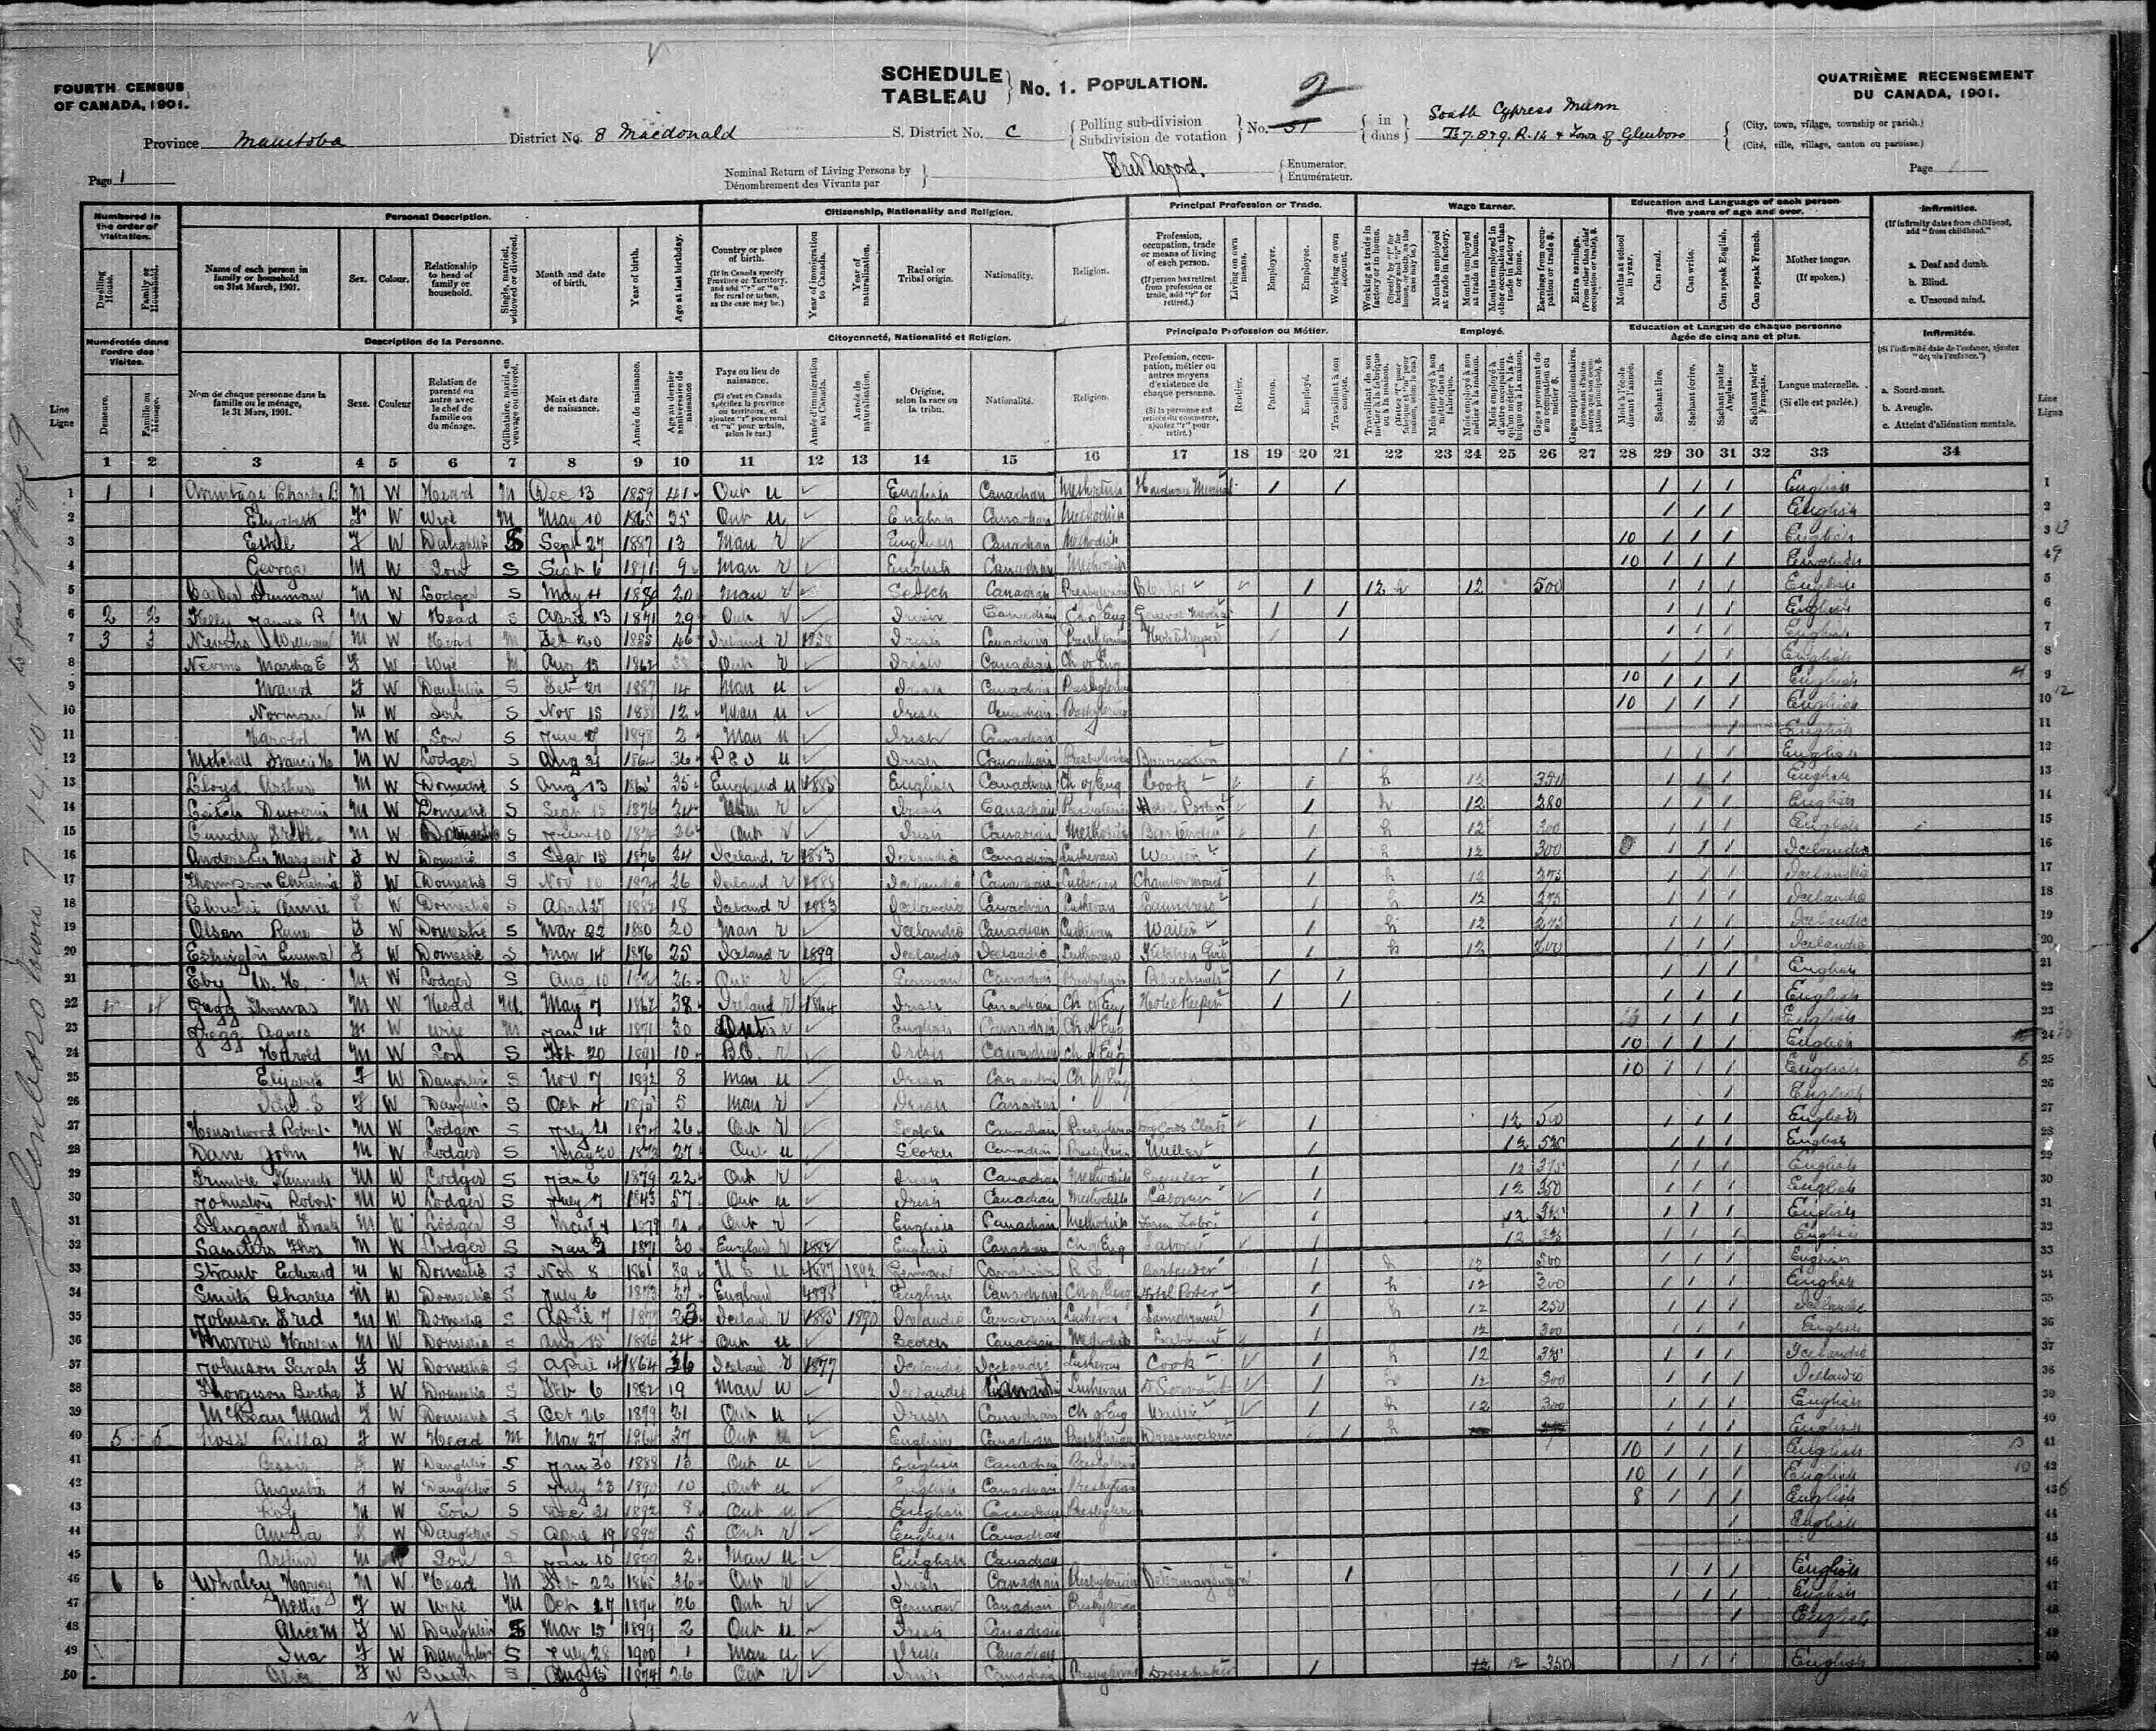 1901 Census Return Schedule A, Sault St. Marie Town